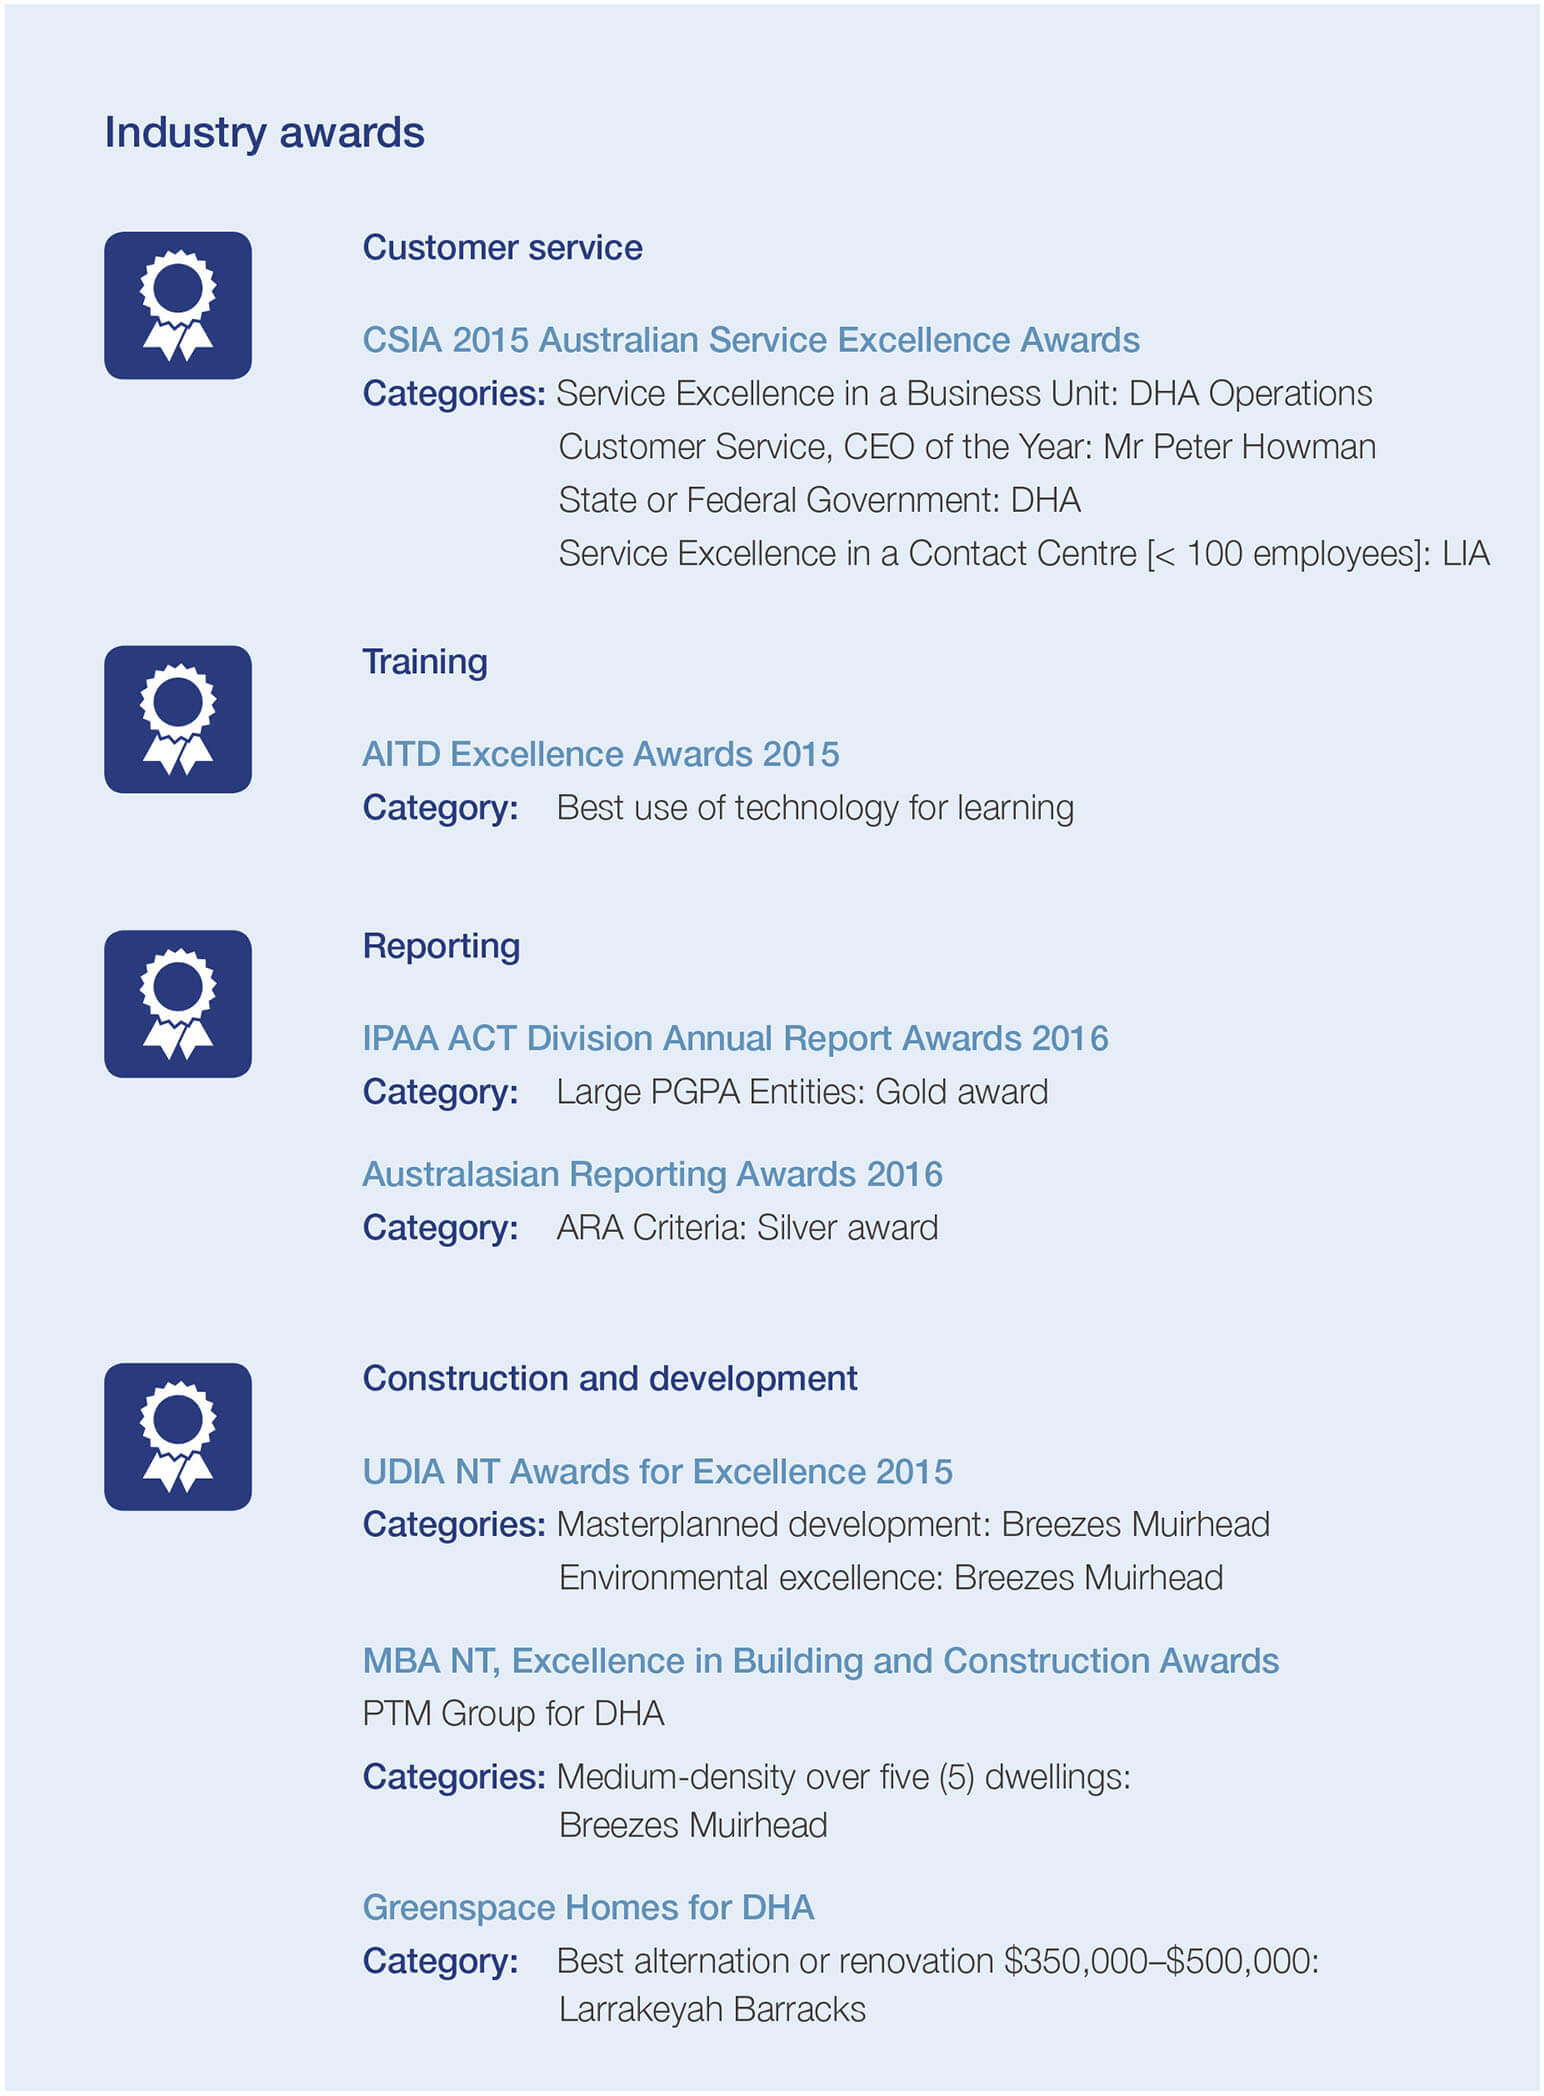 Industry awards